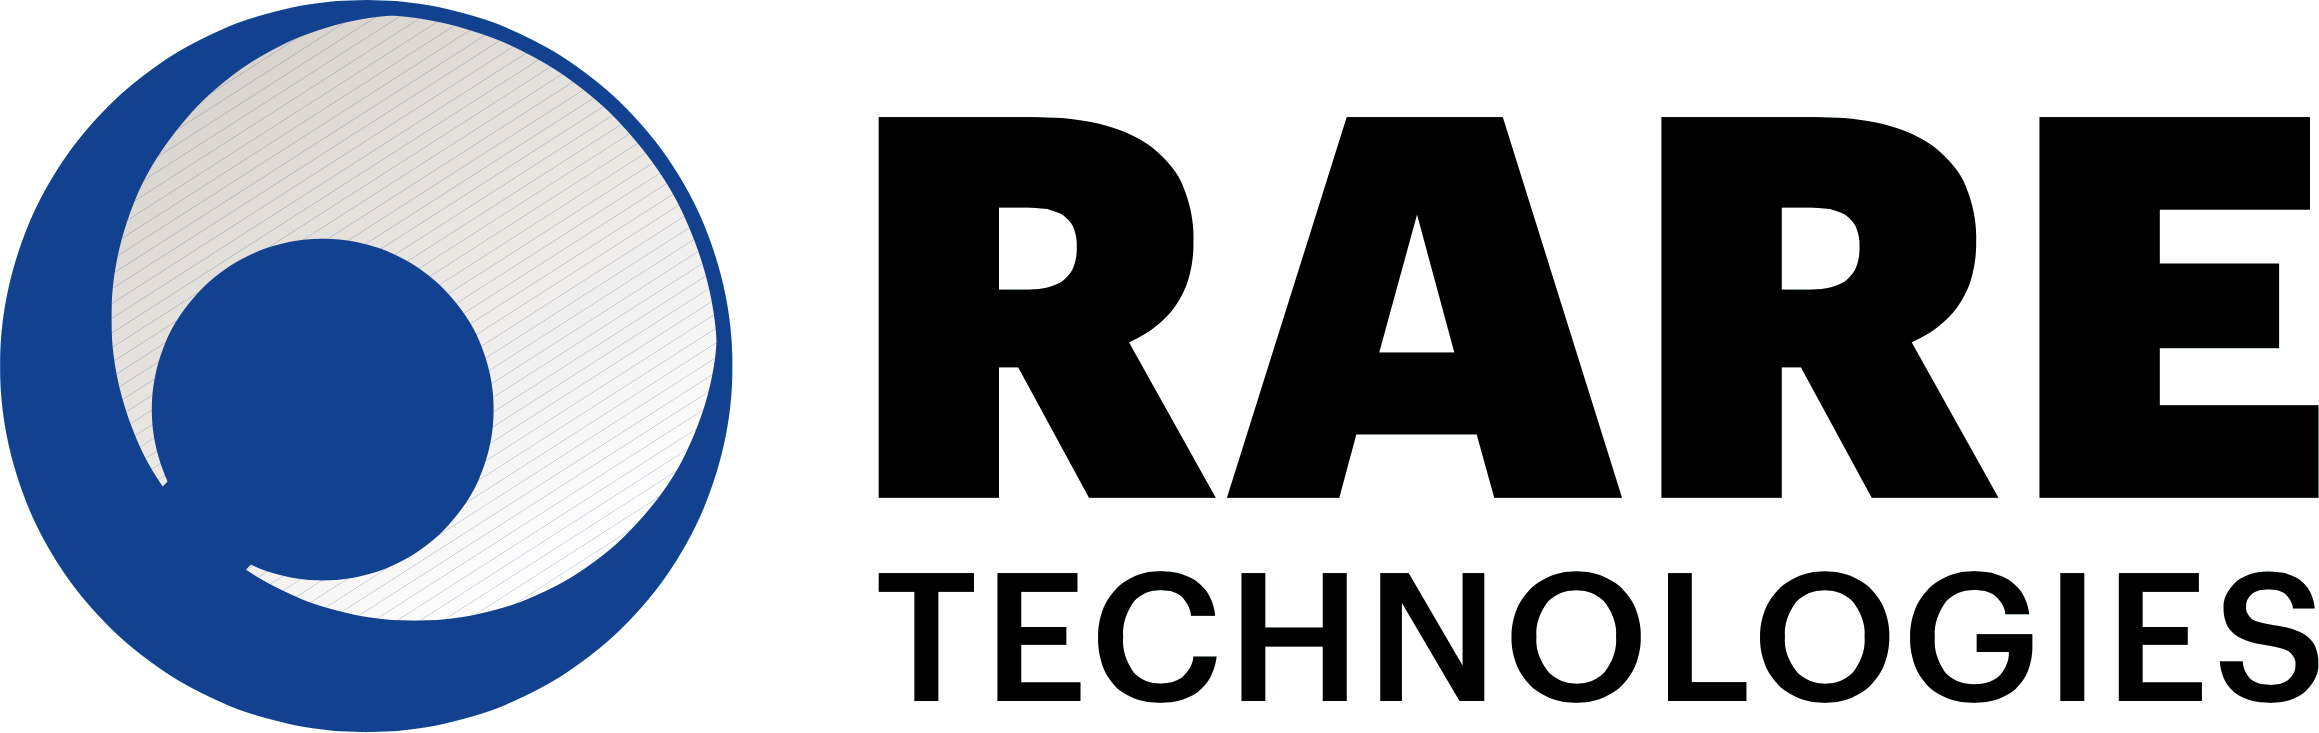 RaRe Technologies cover